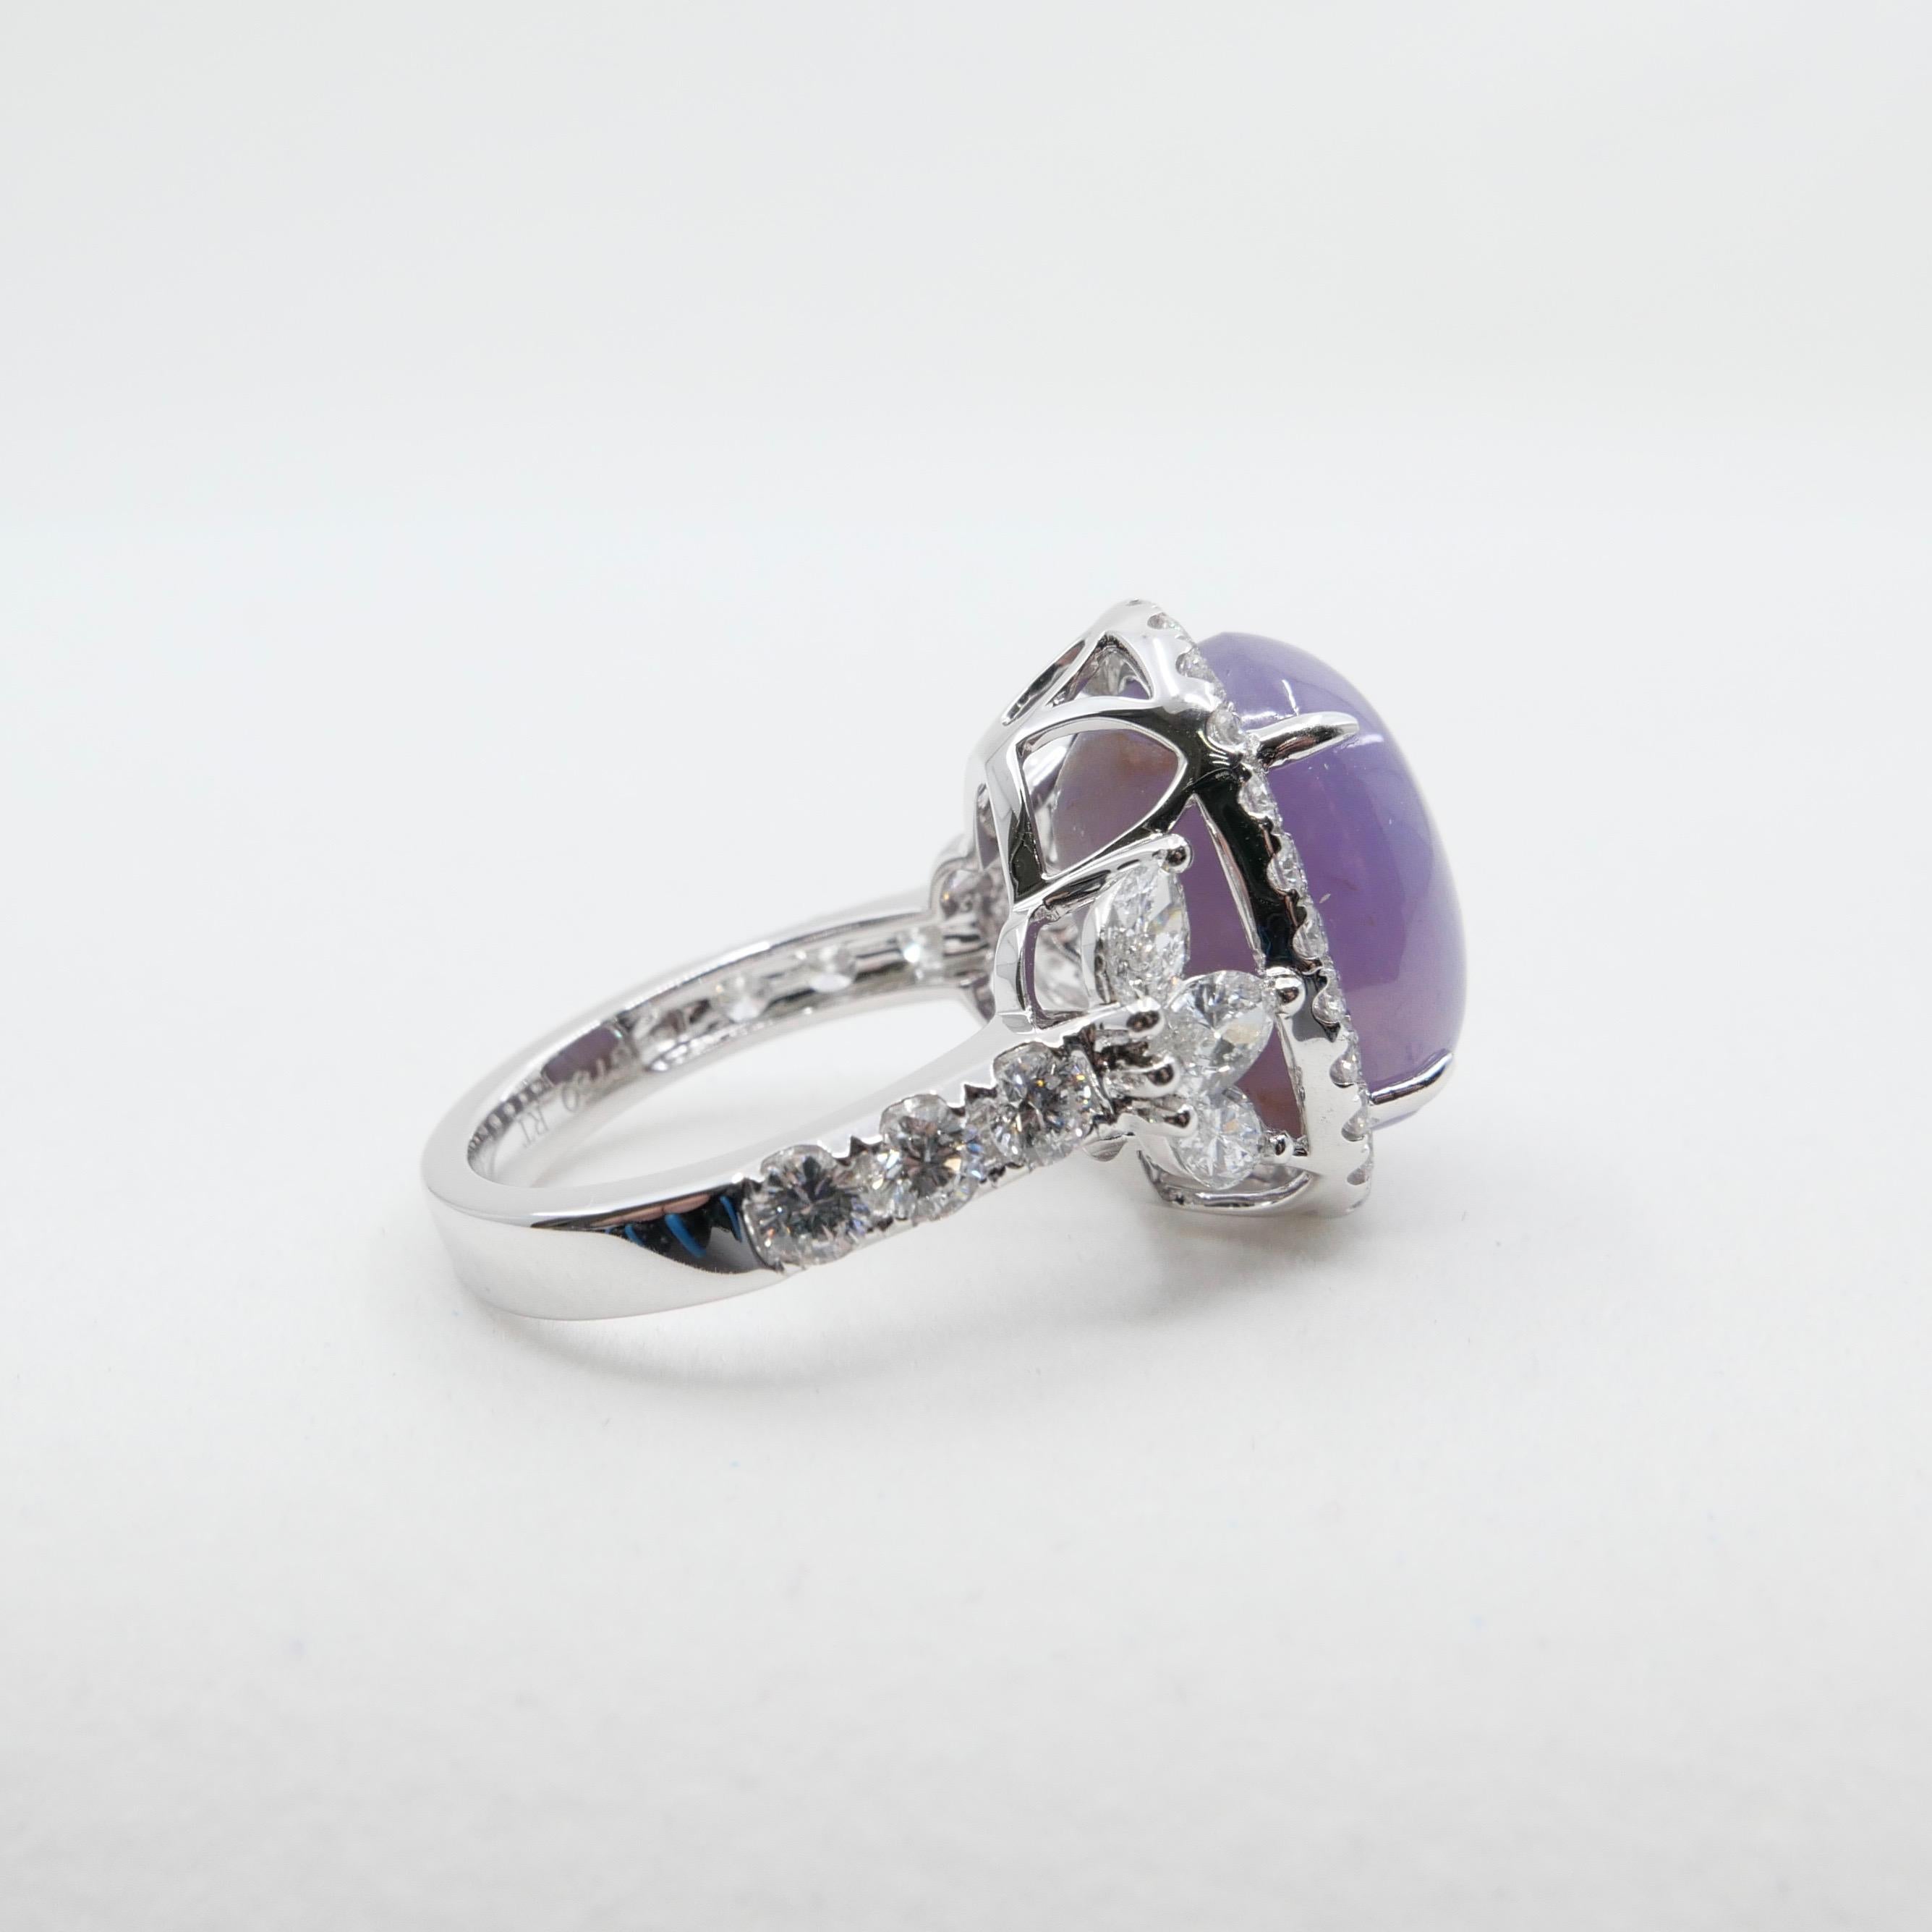 Certified Purple Star Sapphire 20.70 Carat Diamond Cocktail Ring, Statement Ring 5